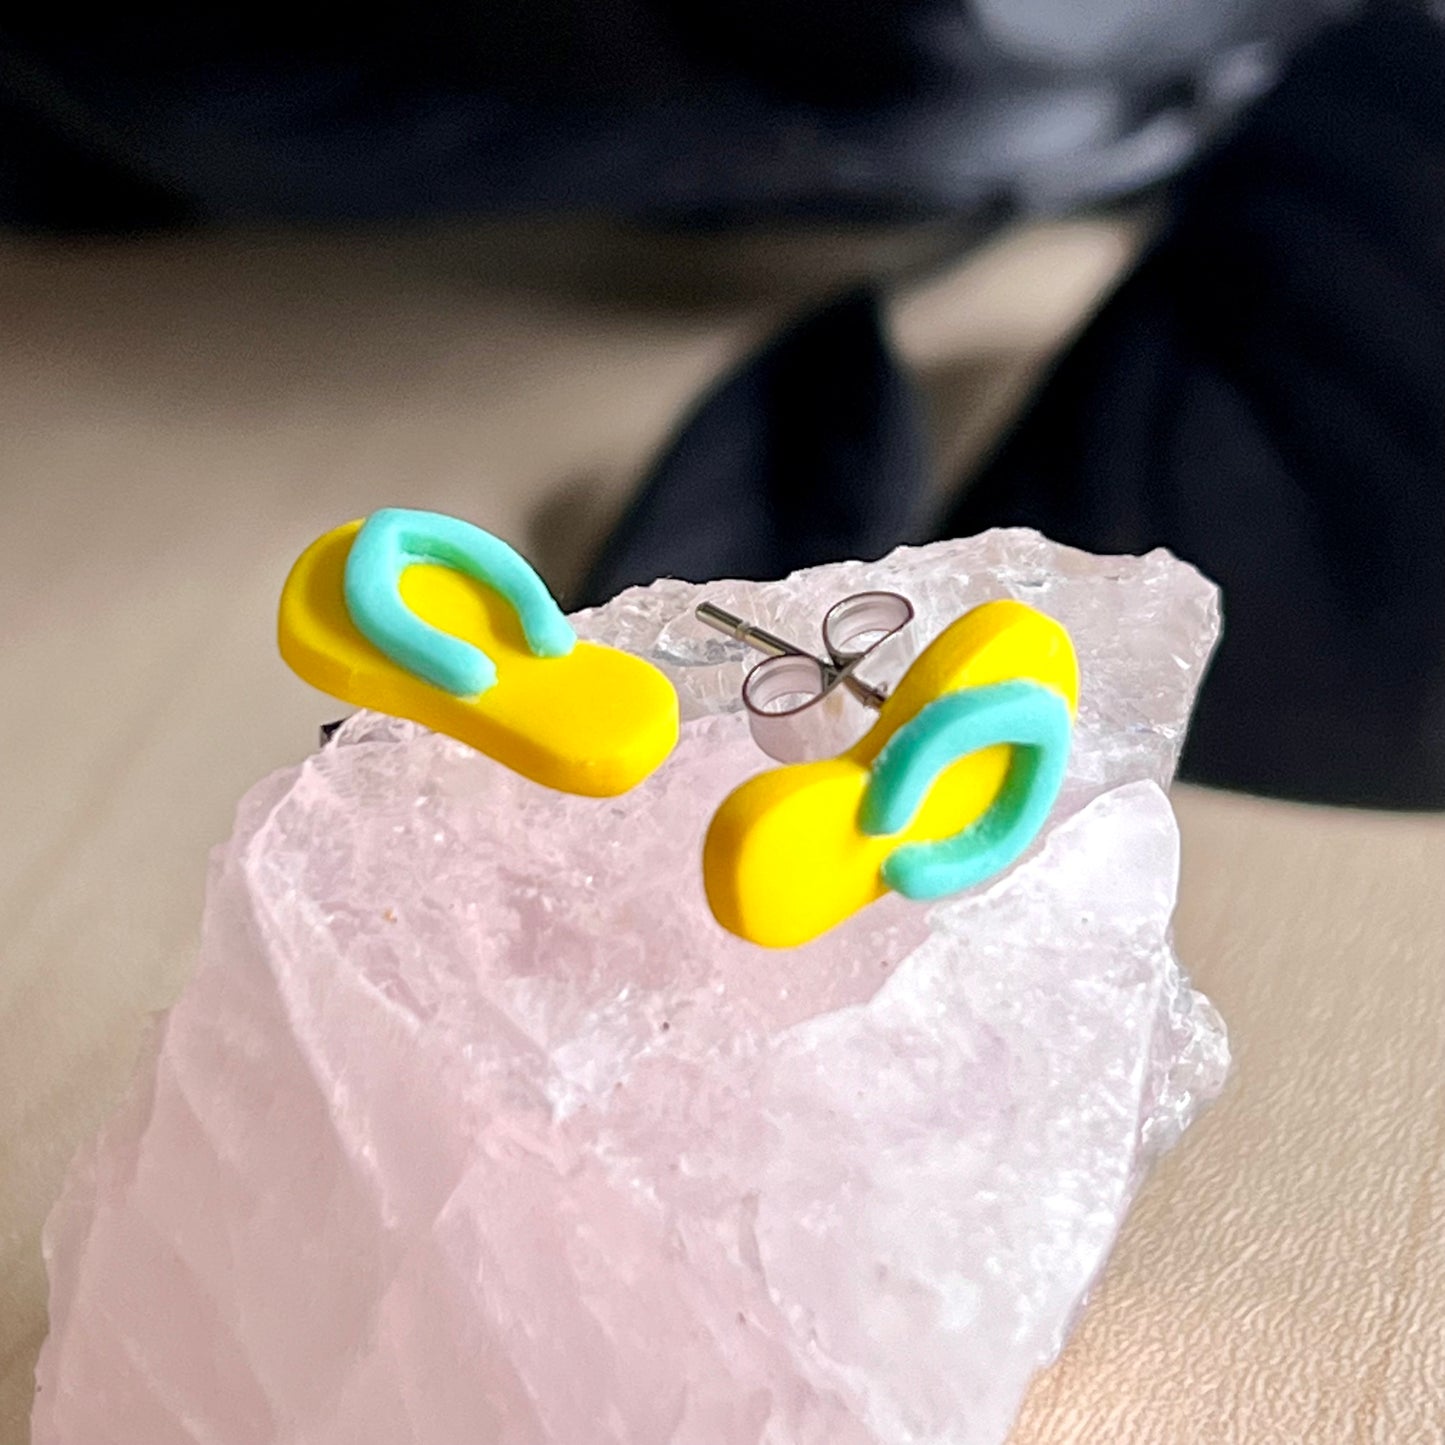 Thongs / flip flops studs, Yellow with Fiji blue, handmade earrings